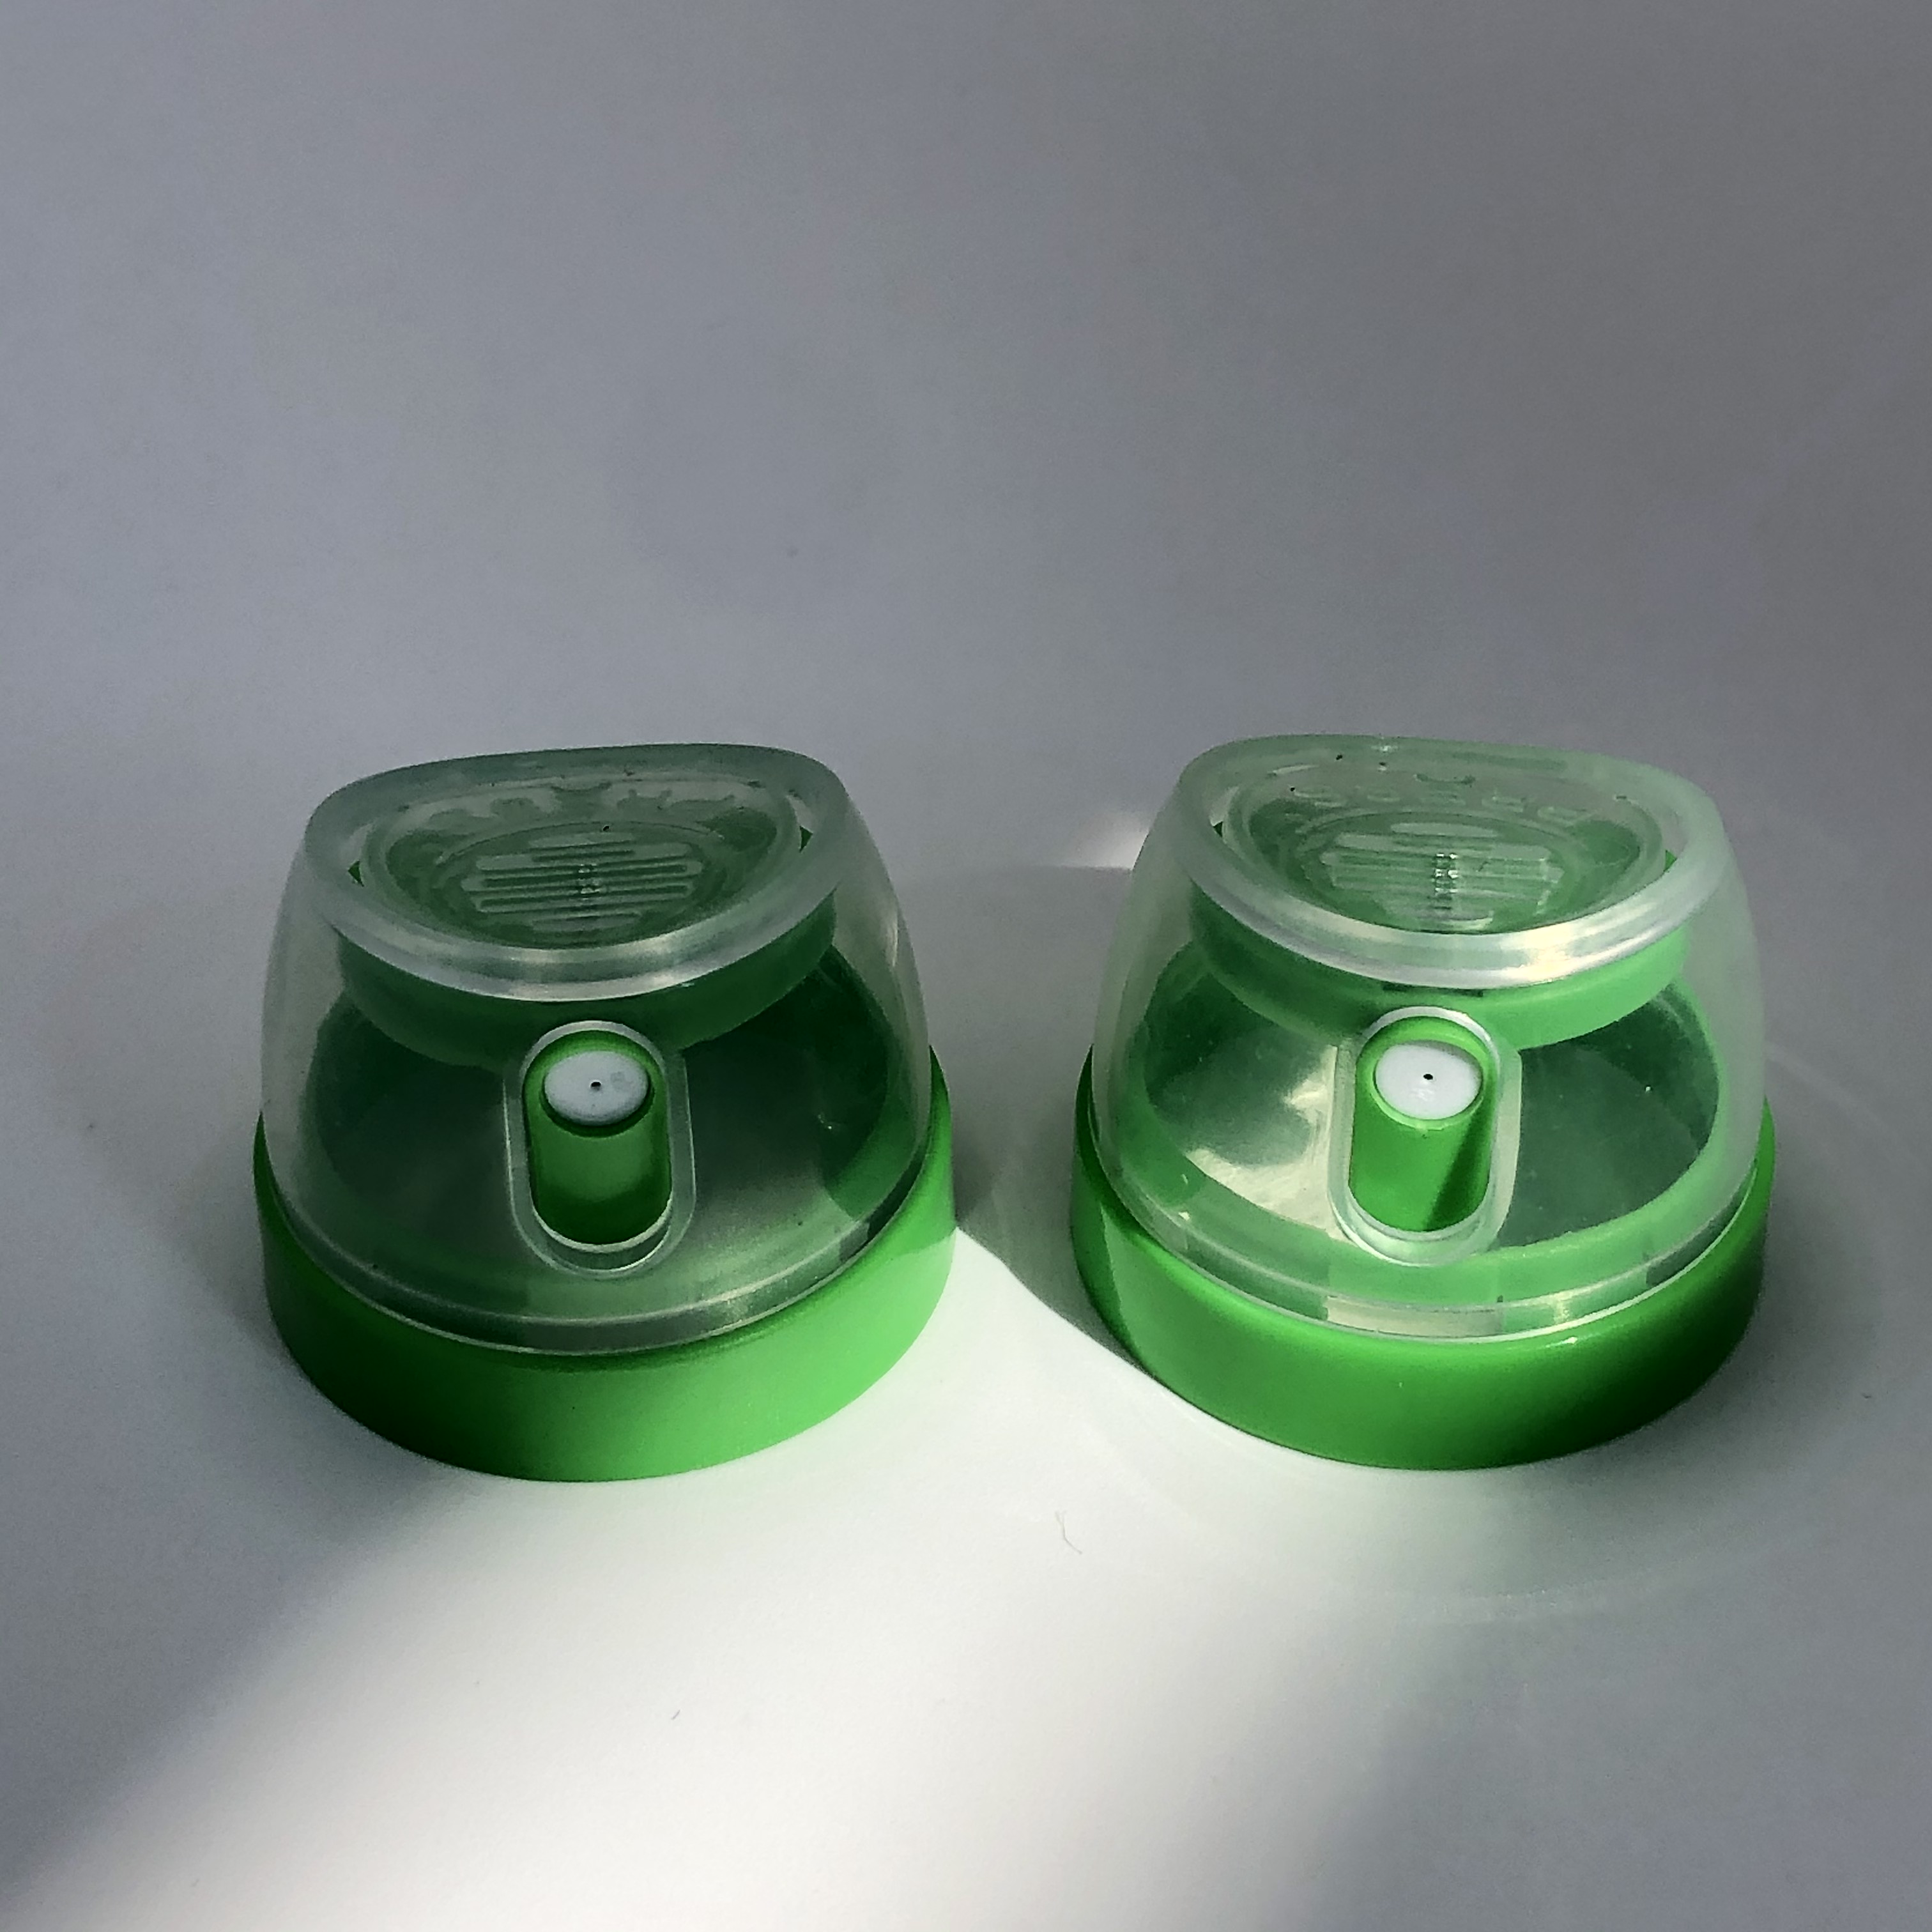 Food-Safe Aerosol Spray Cap - BPA-Free, 35mm Size